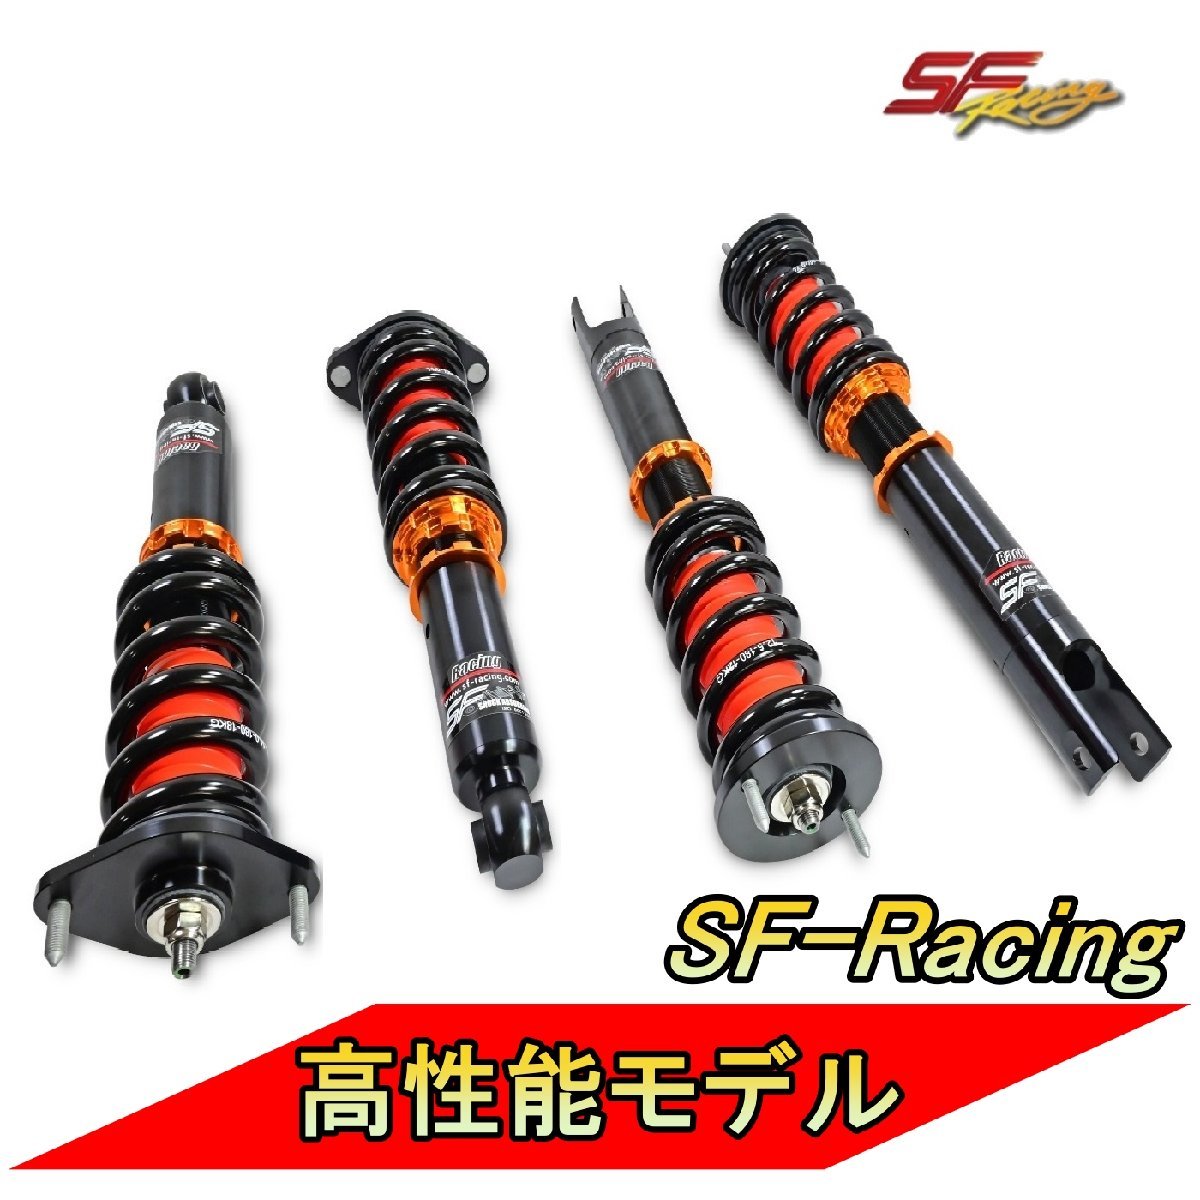 SF-Racing shock absorber XF X250 Jaguar suspension total length adjustment 32 step attenuation height performance model 